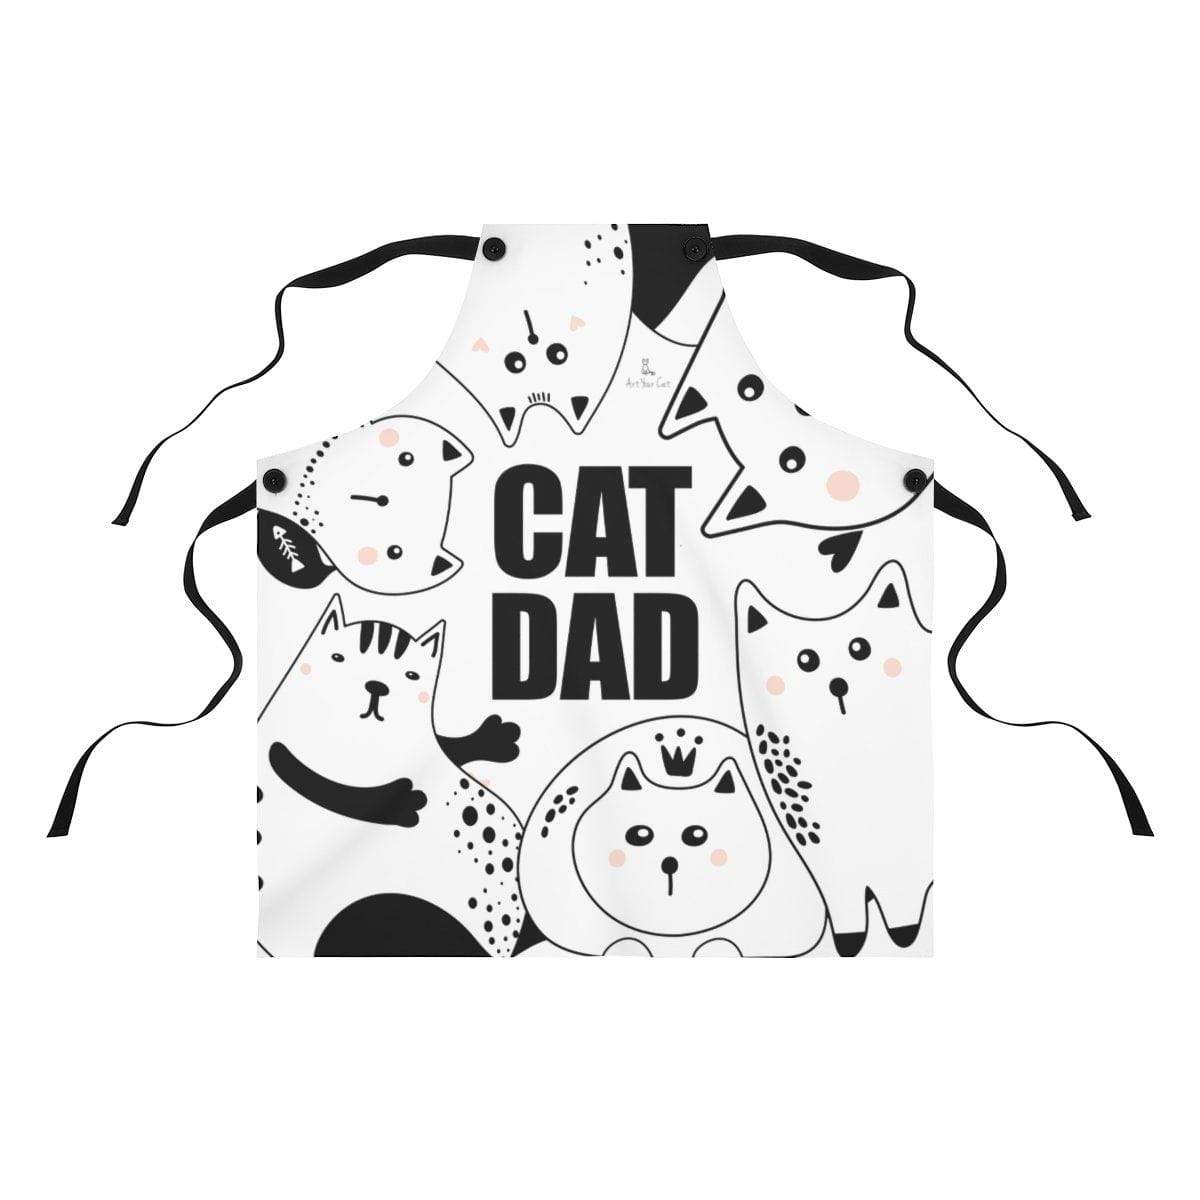 The Cat Dad - Baking Apron